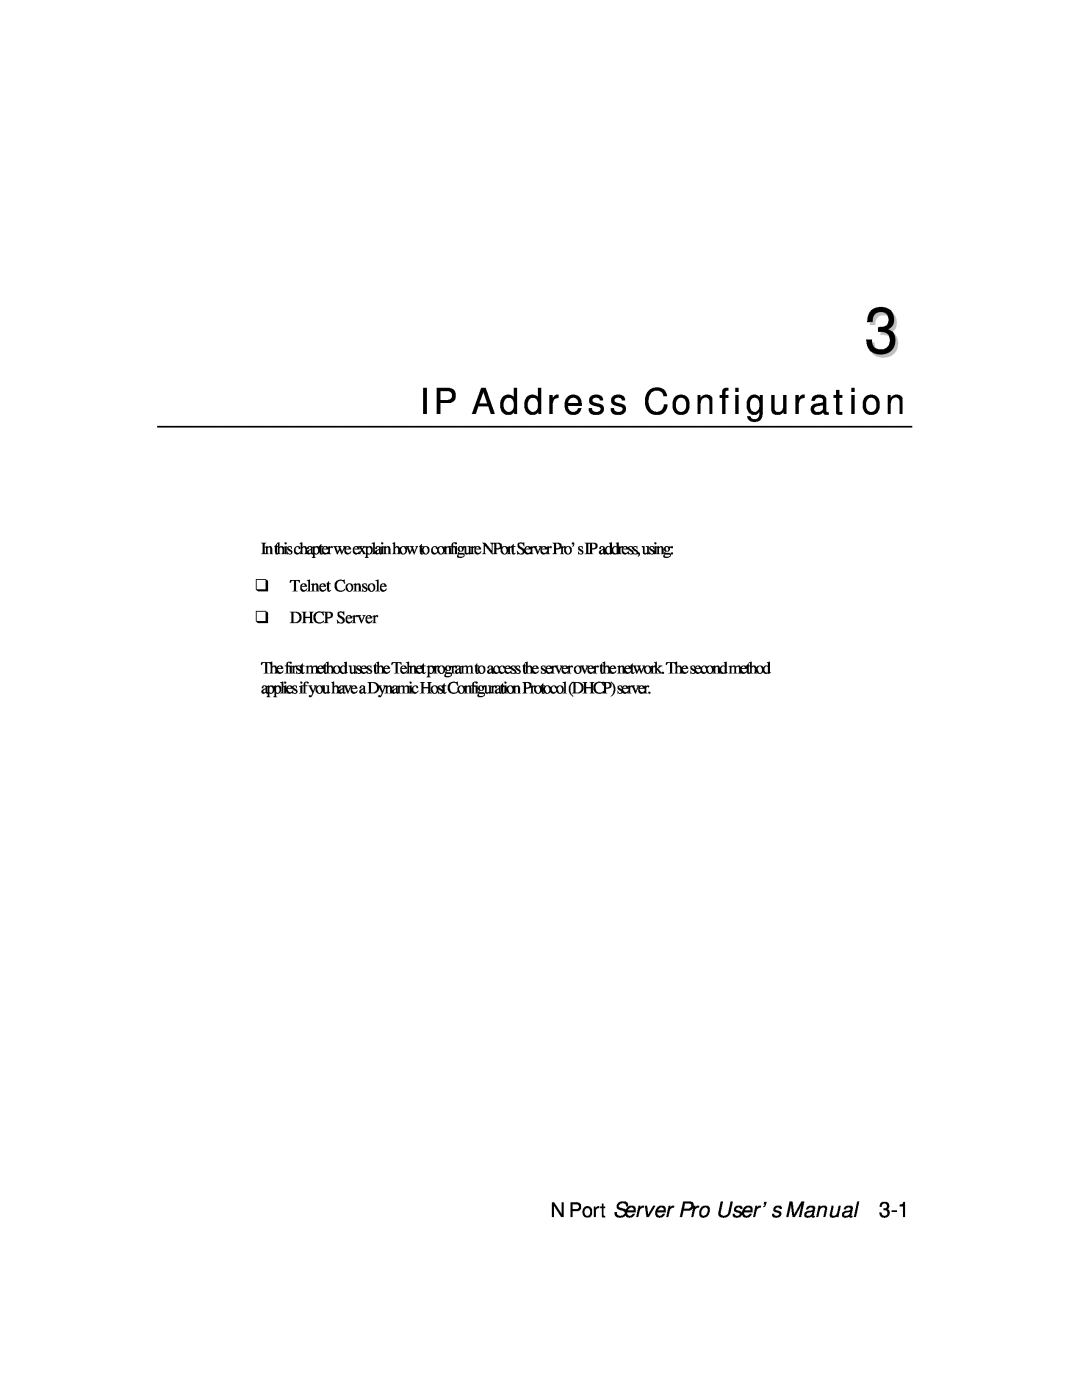 Moxa Technologies DE-308, DE-303 IP Address Configuration, NPort Server Pro User’s Manual, q Telnet Console q DHCP Server 